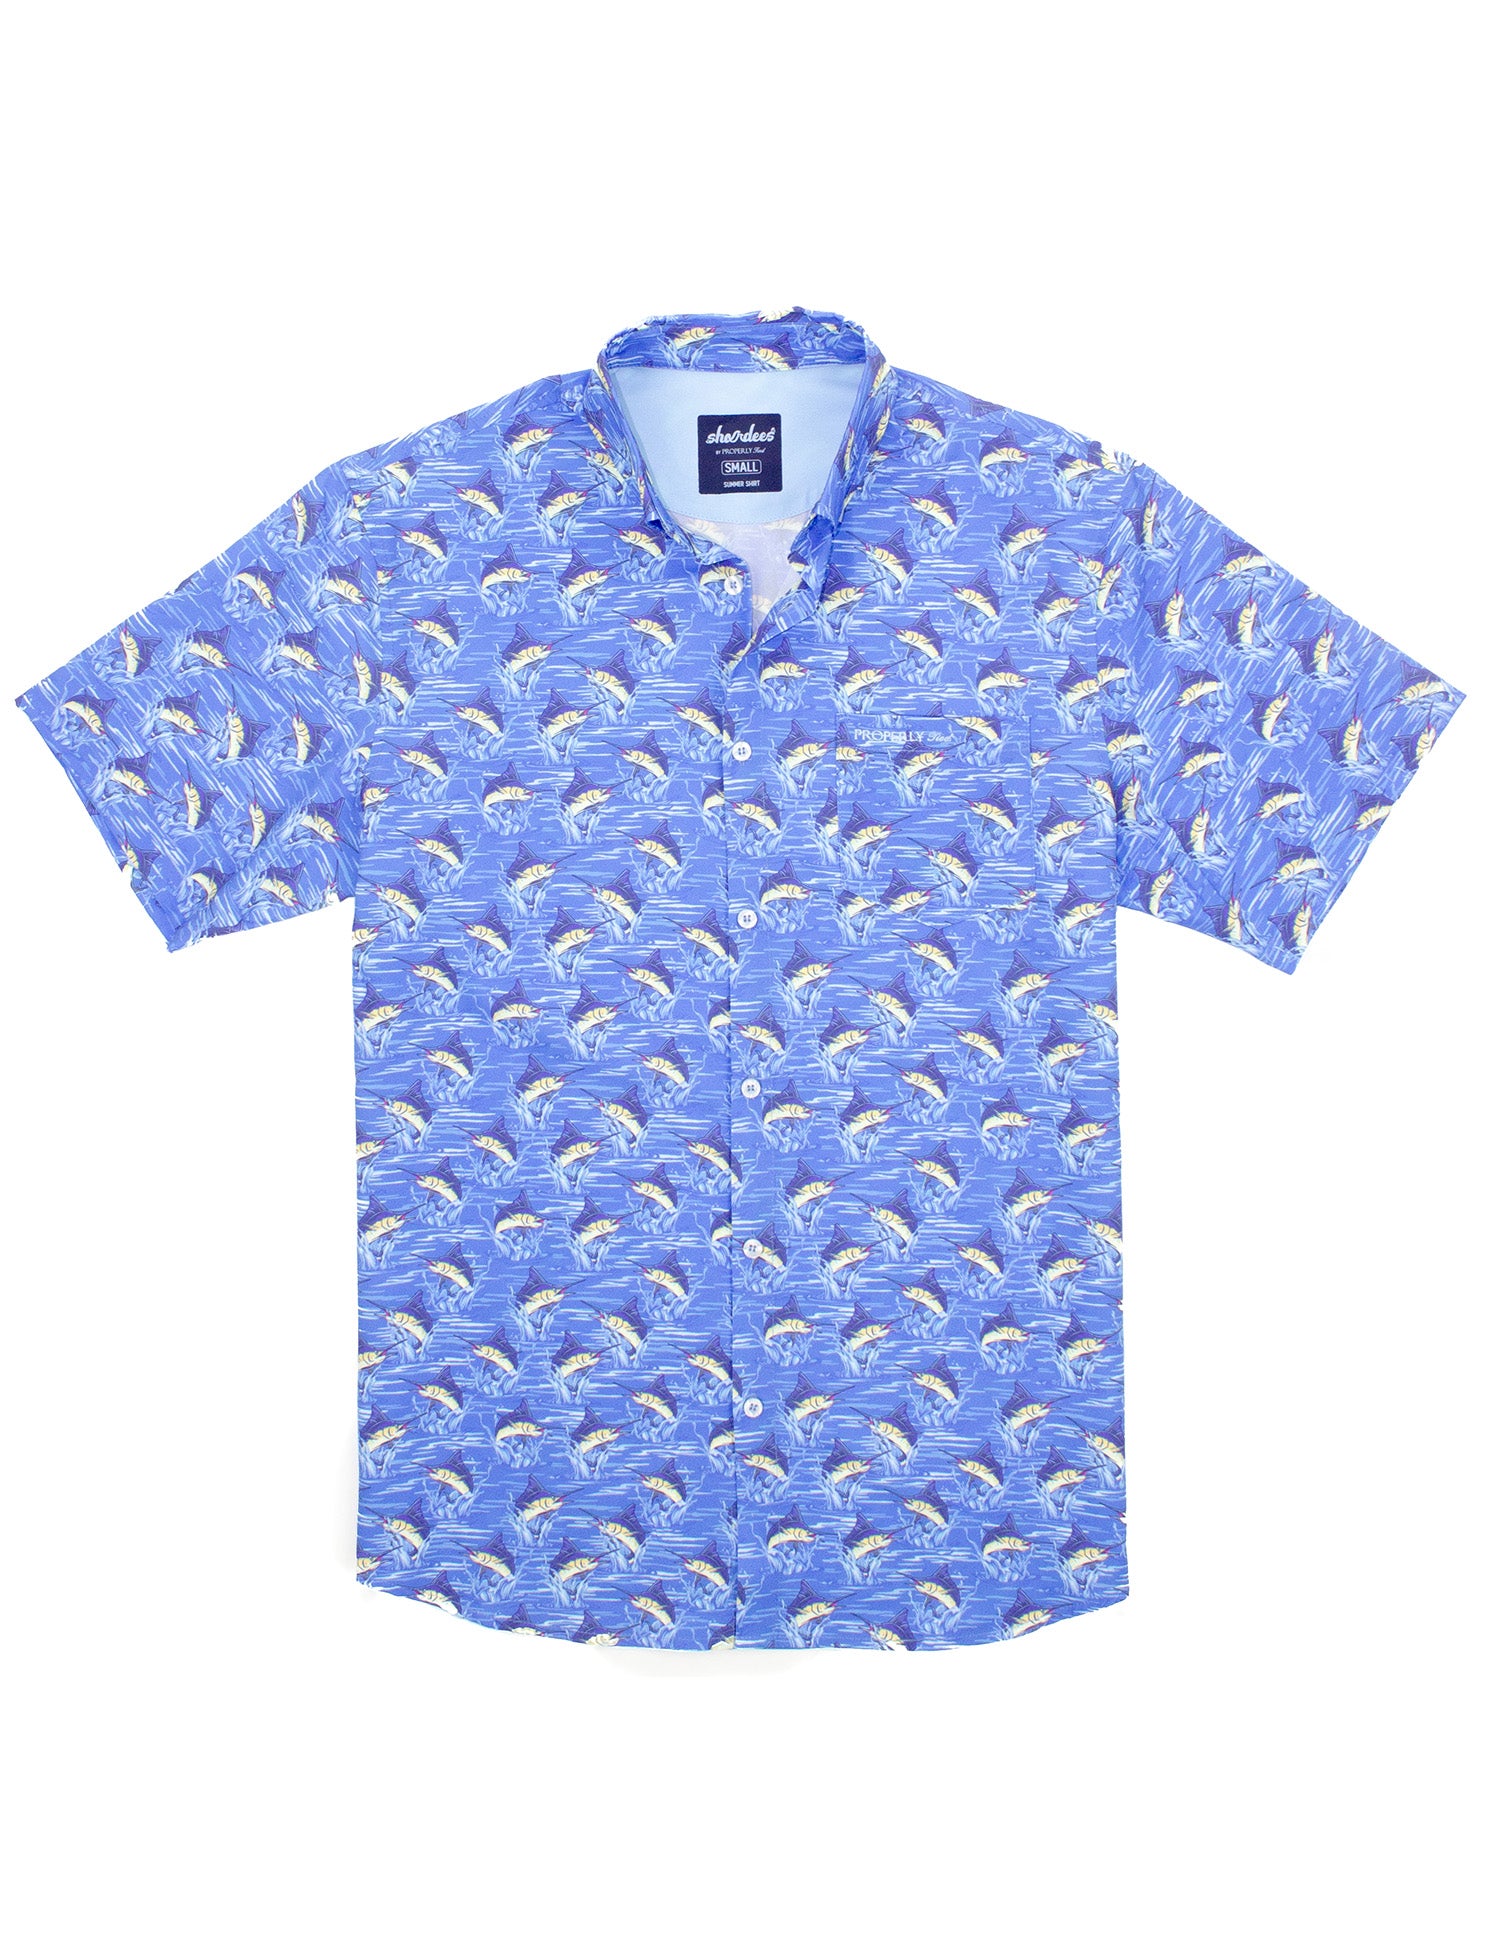 Shordees Summer Shirt Marlin